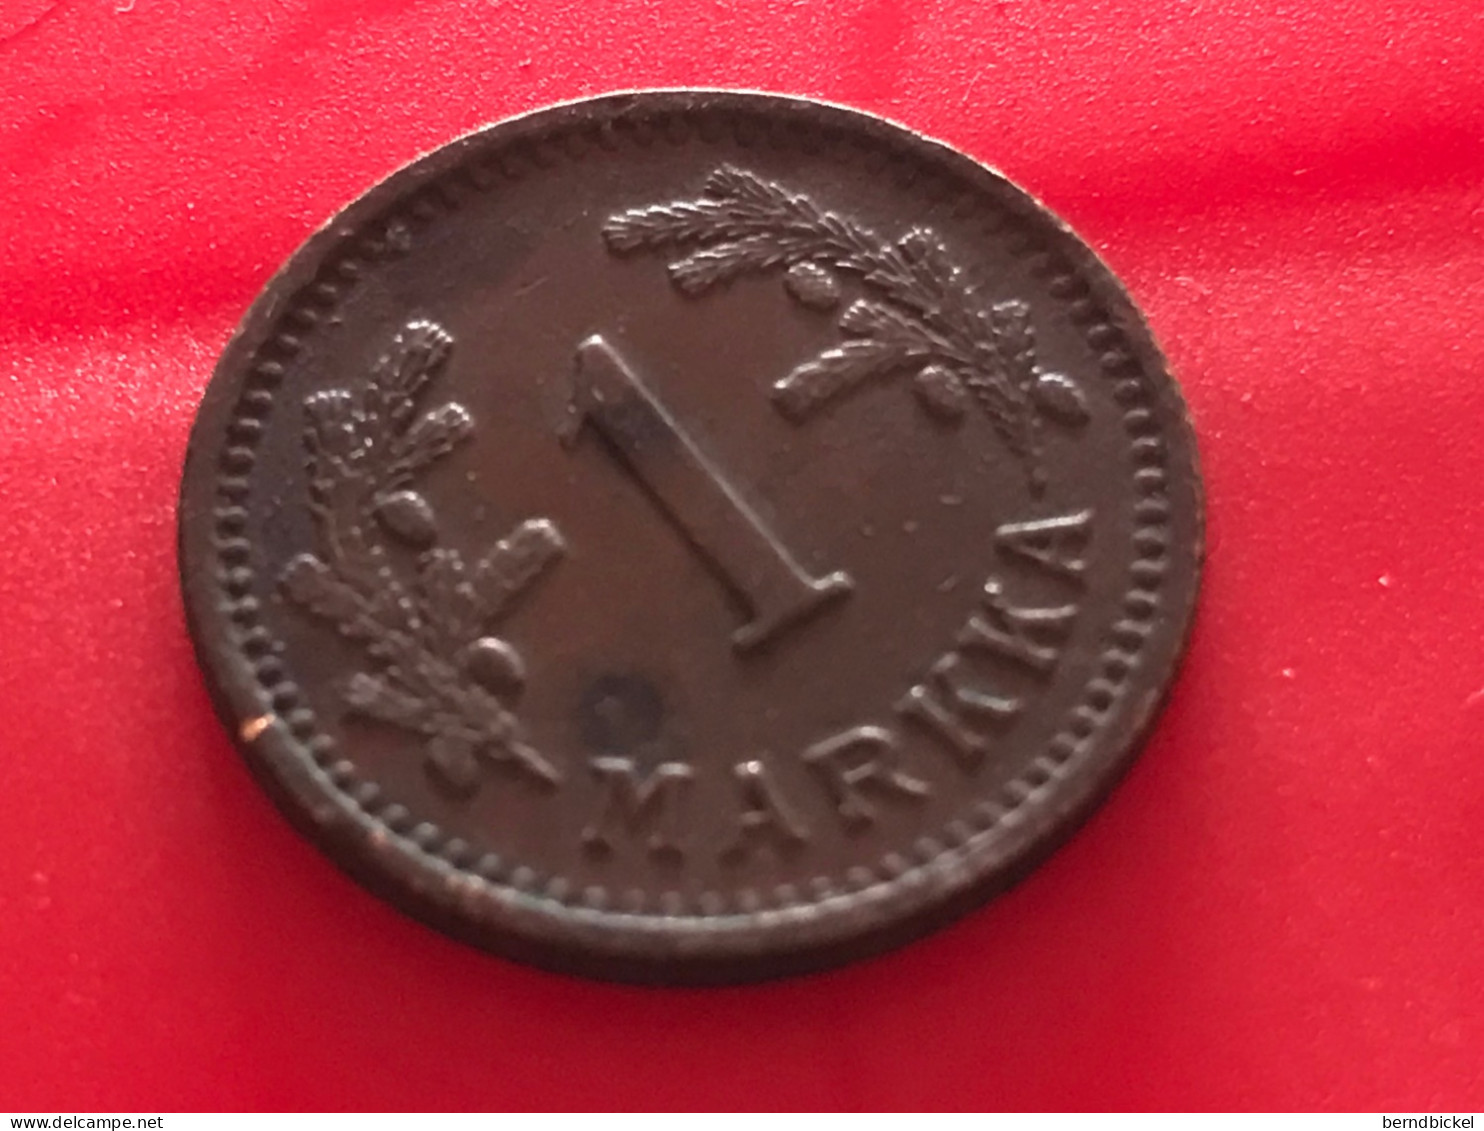 Münze Münzen Umlaufmünze Finnland 1 Markka 1942 - Finnland